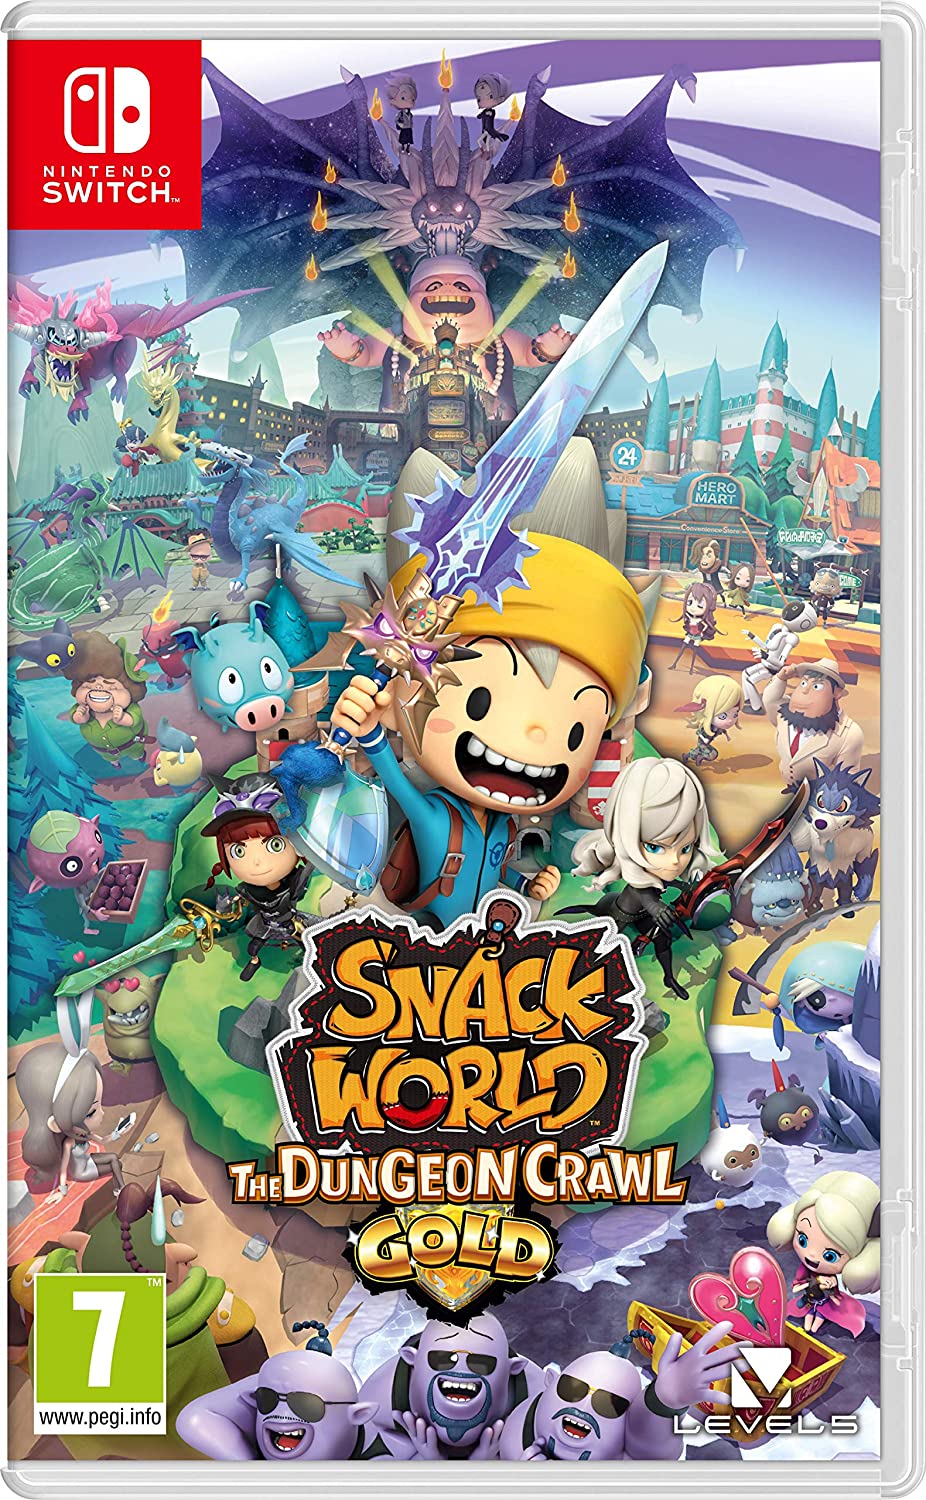 Snack World: The Dungeon Crawl - Goud (Nintendo Switch)